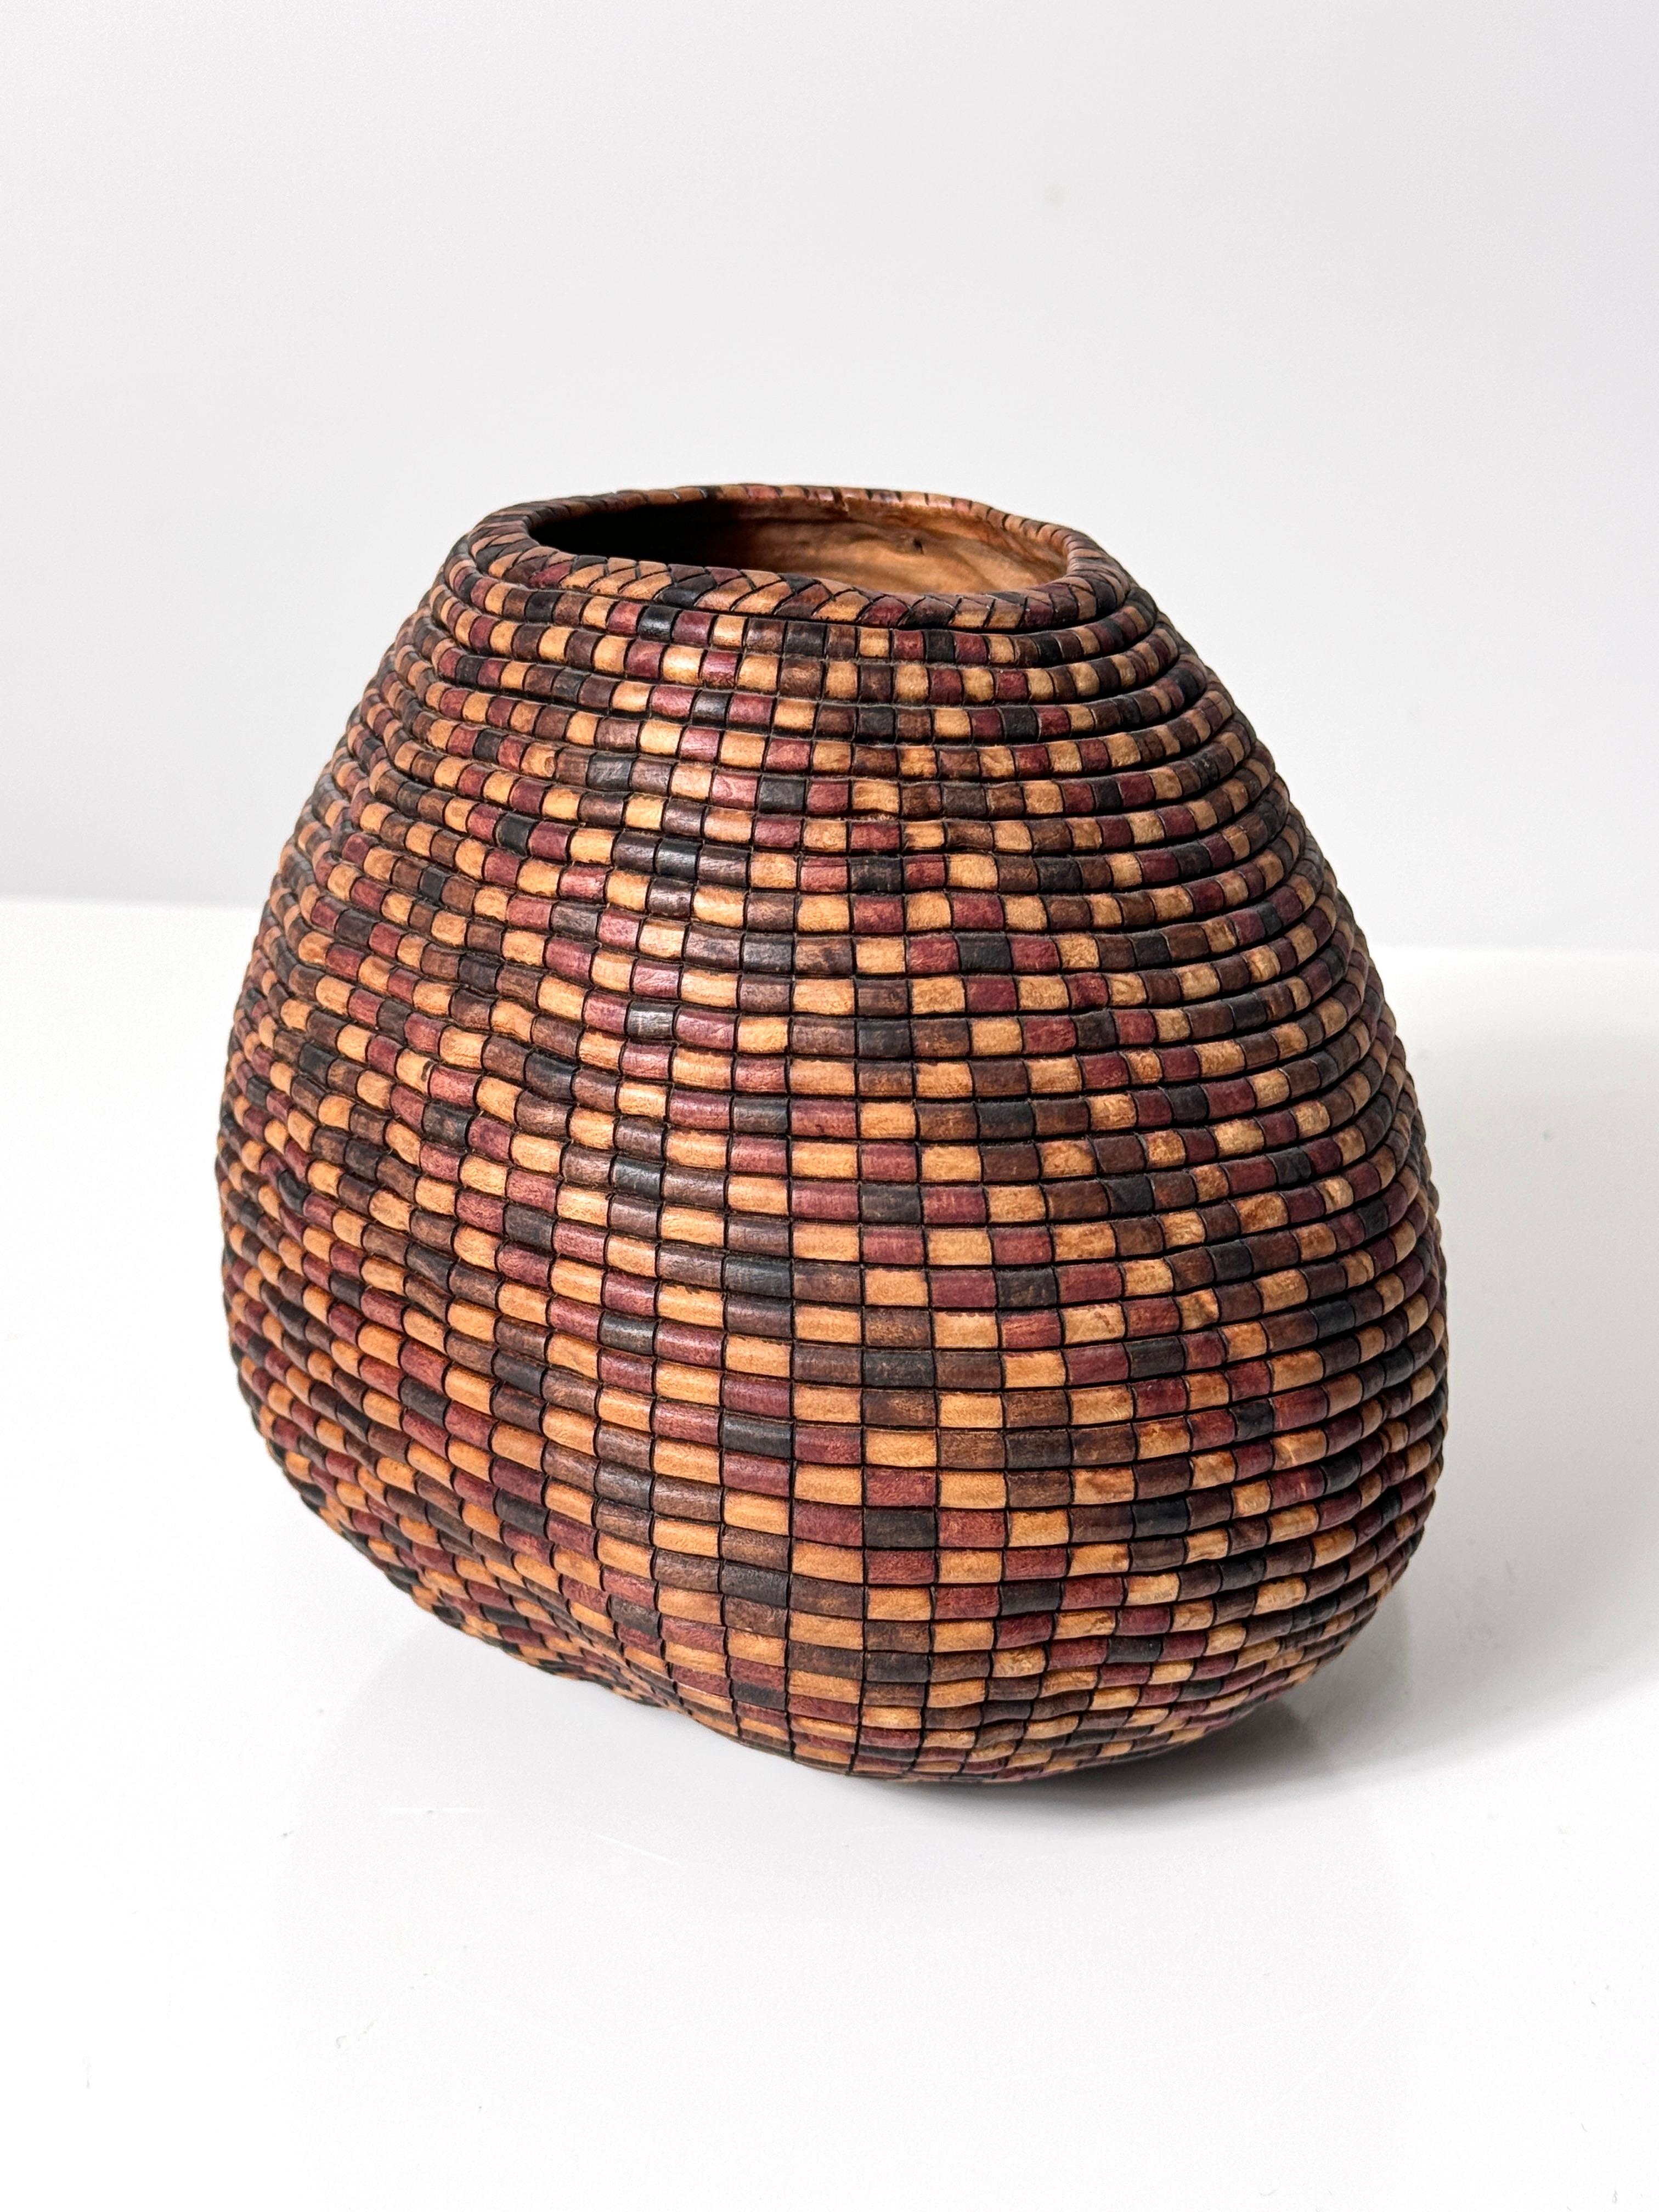 North American American Studio Turned Wood Basket Illusion Vessel Bowl by David Nittmann 1990s